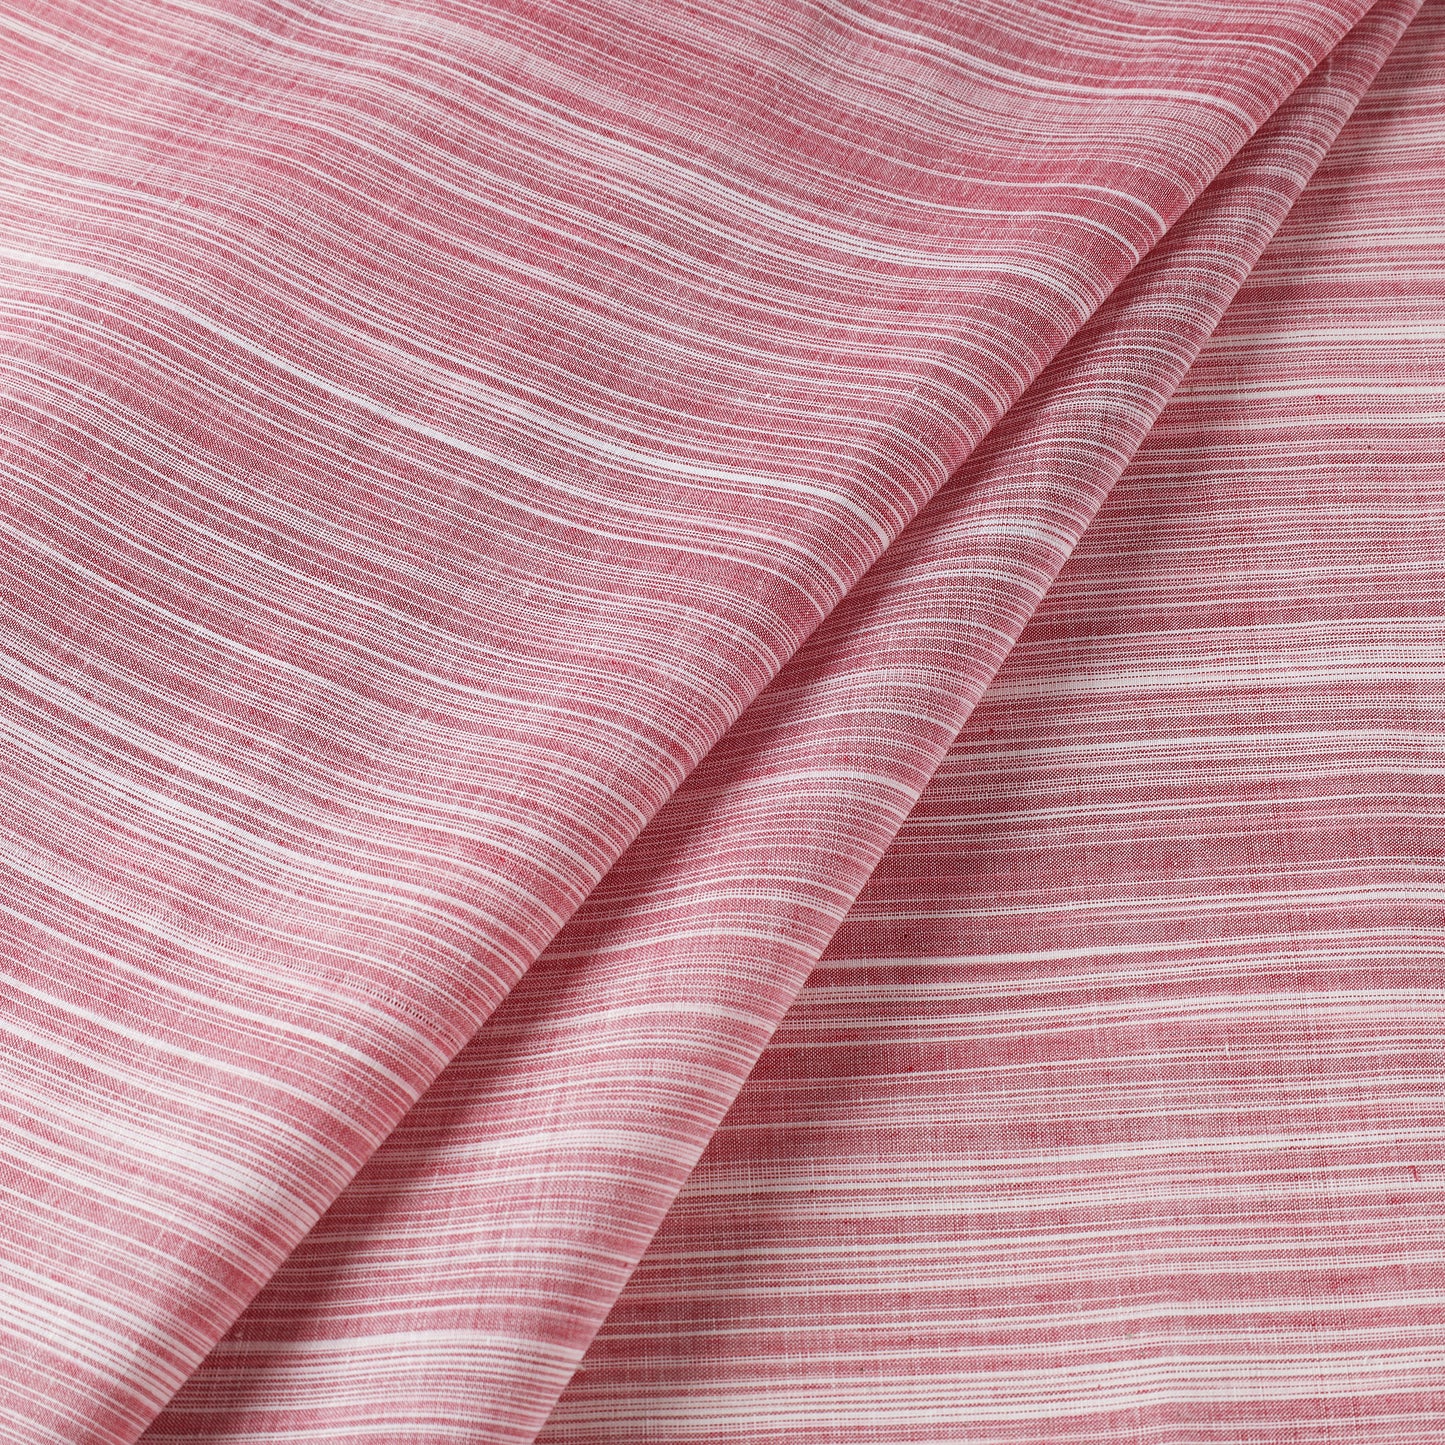 Pink - Mangalagiri Plain Handloom Cotton Fabric